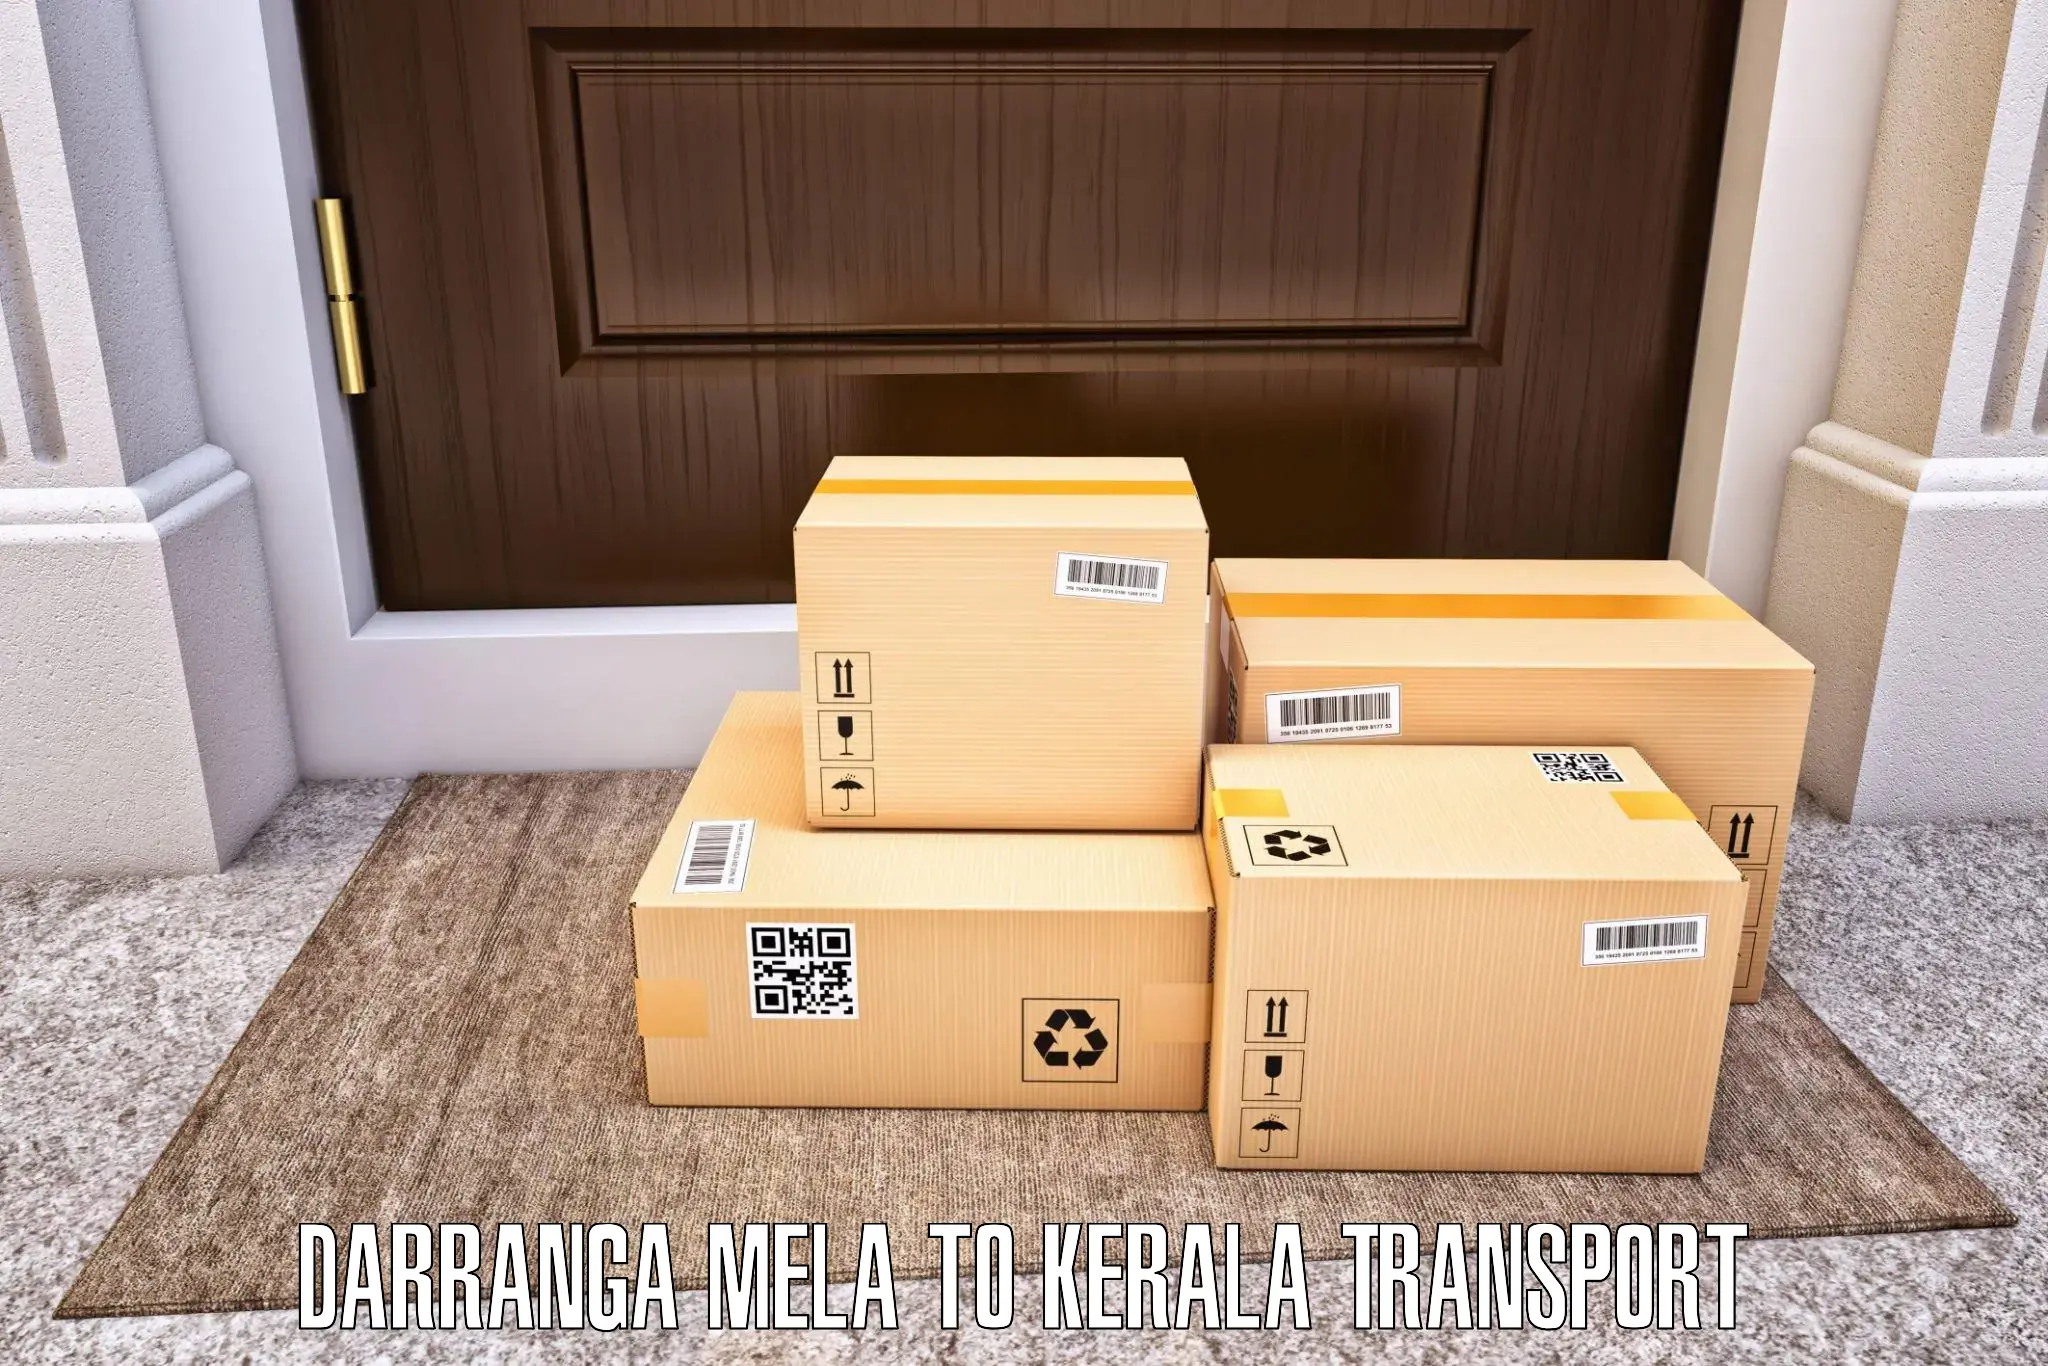 Two wheeler parcel service Darranga Mela to Kuttiady